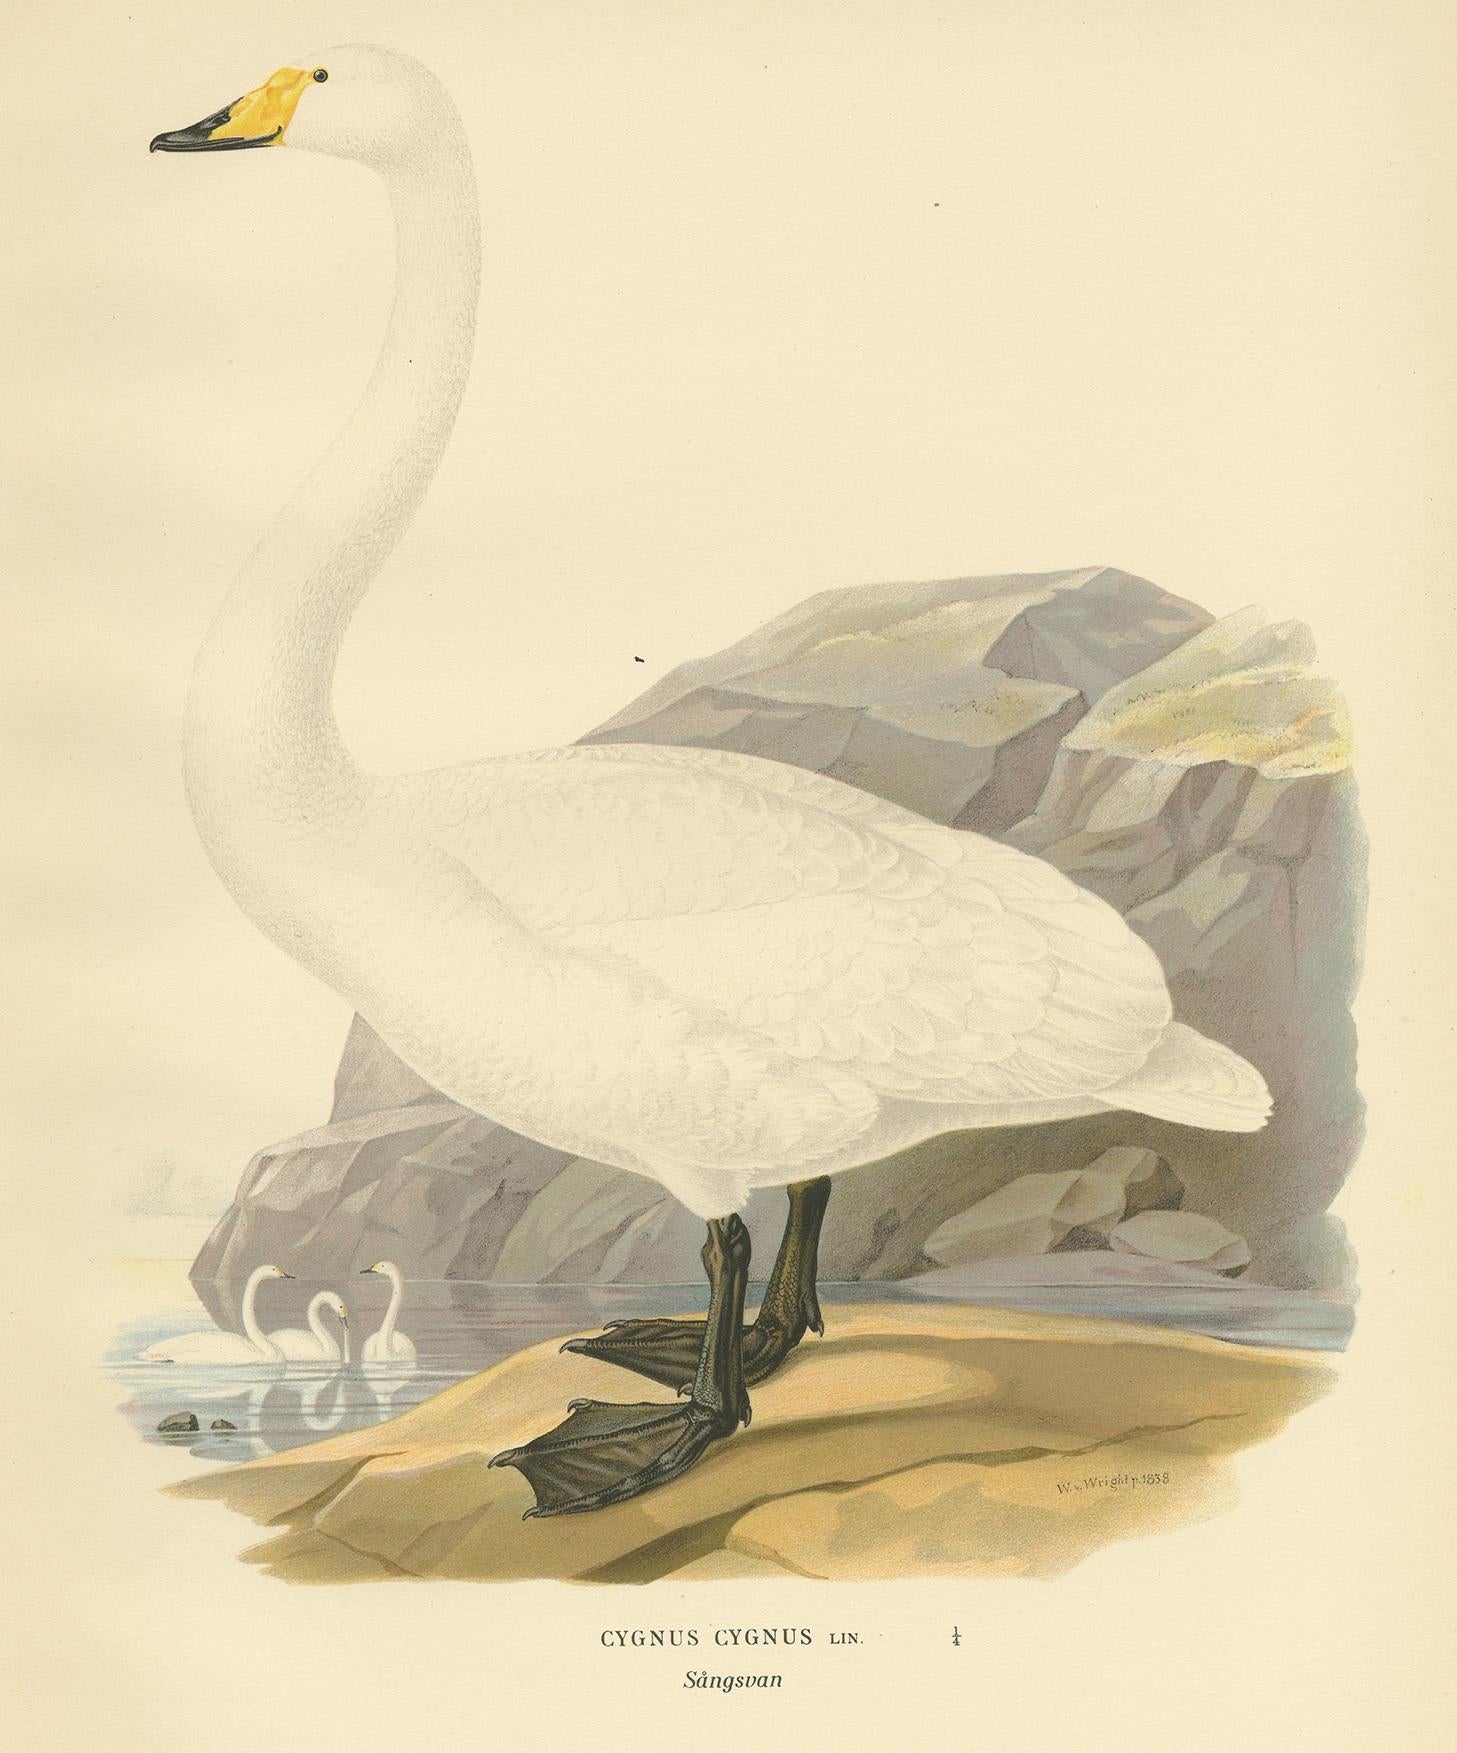 Antique bird print titled 'Cygnus Cygnus'. Old bird print depicting the whooper swan. This print originates from 'Svenska Foglar Efter Naturen Och Pa Stenritade' by Magnus von Wright.